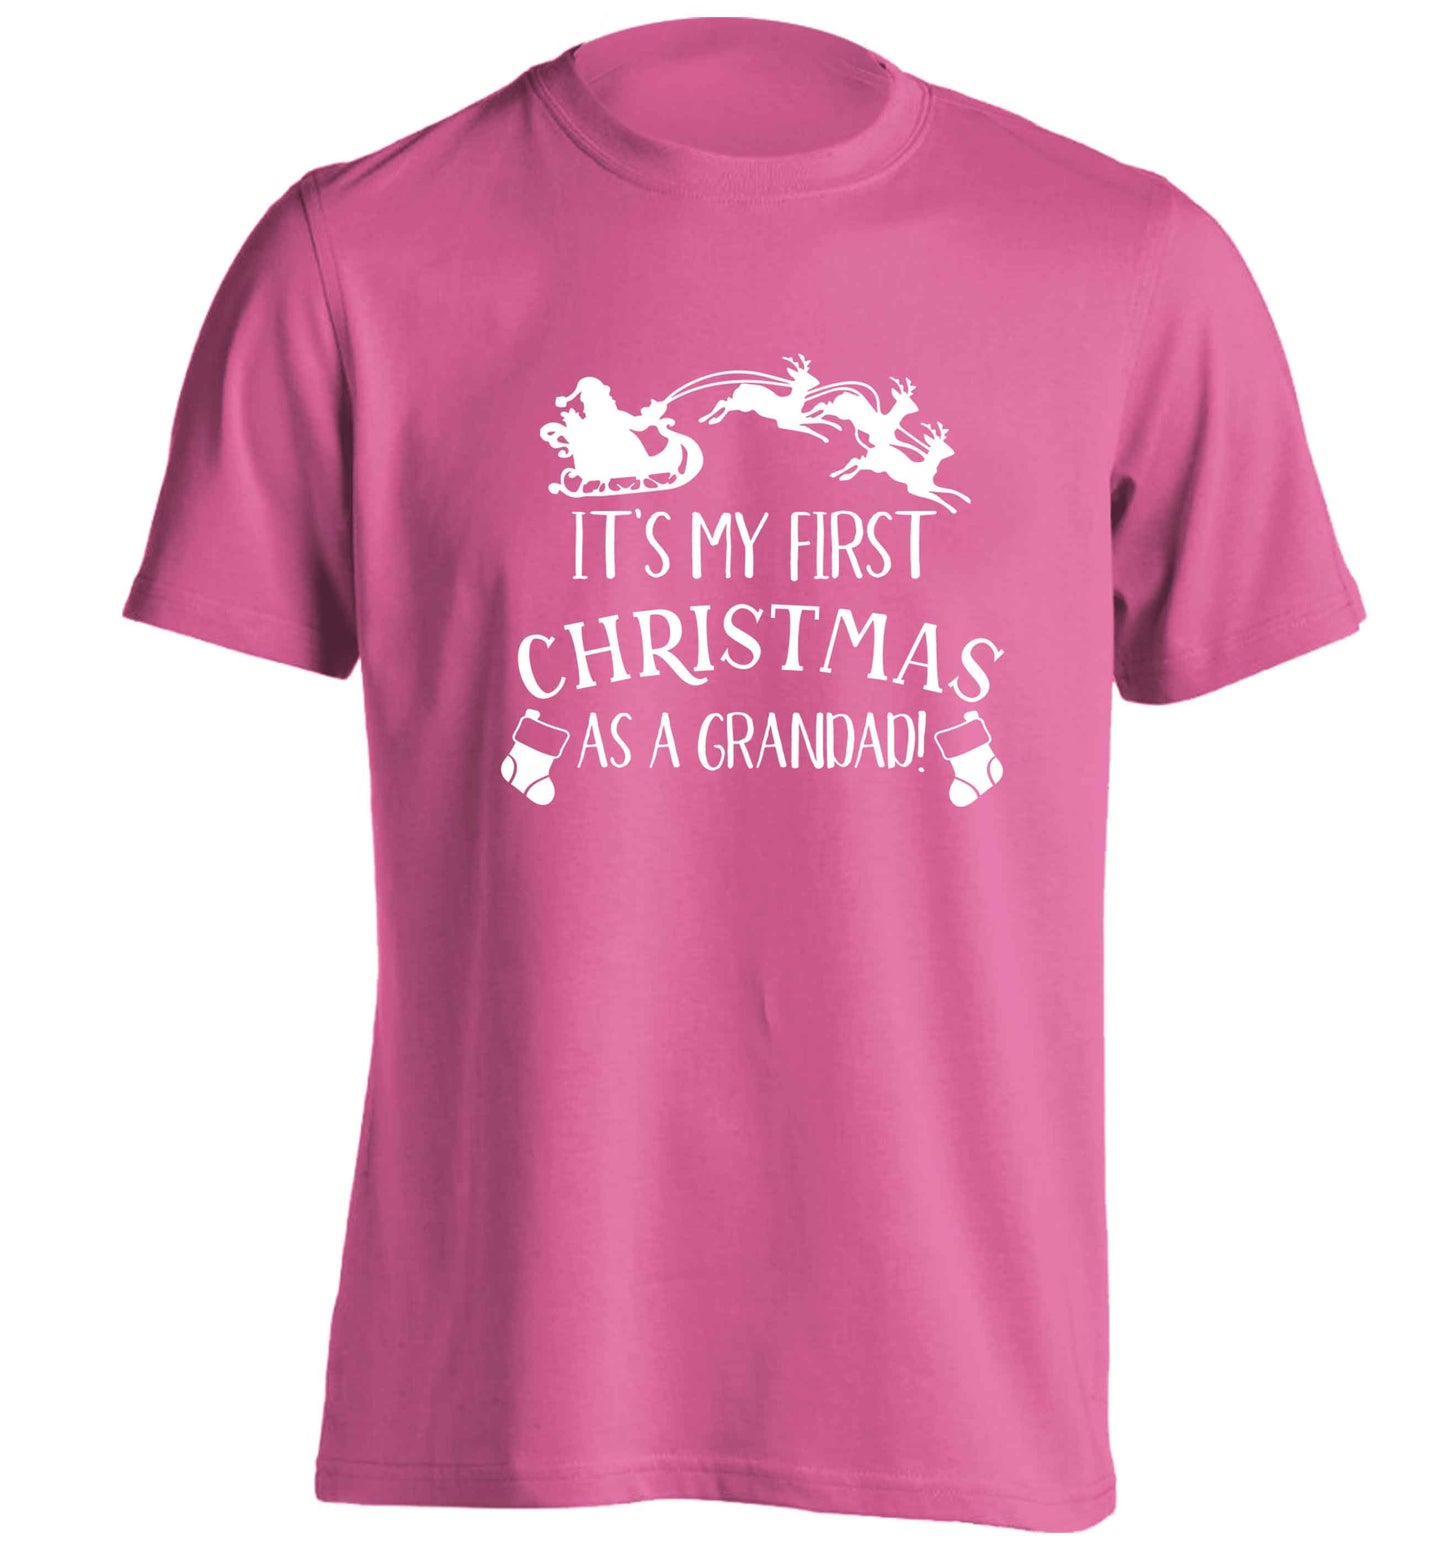 It's my first Christmas as a grandad! adults unisex pink Tshirt 2XL